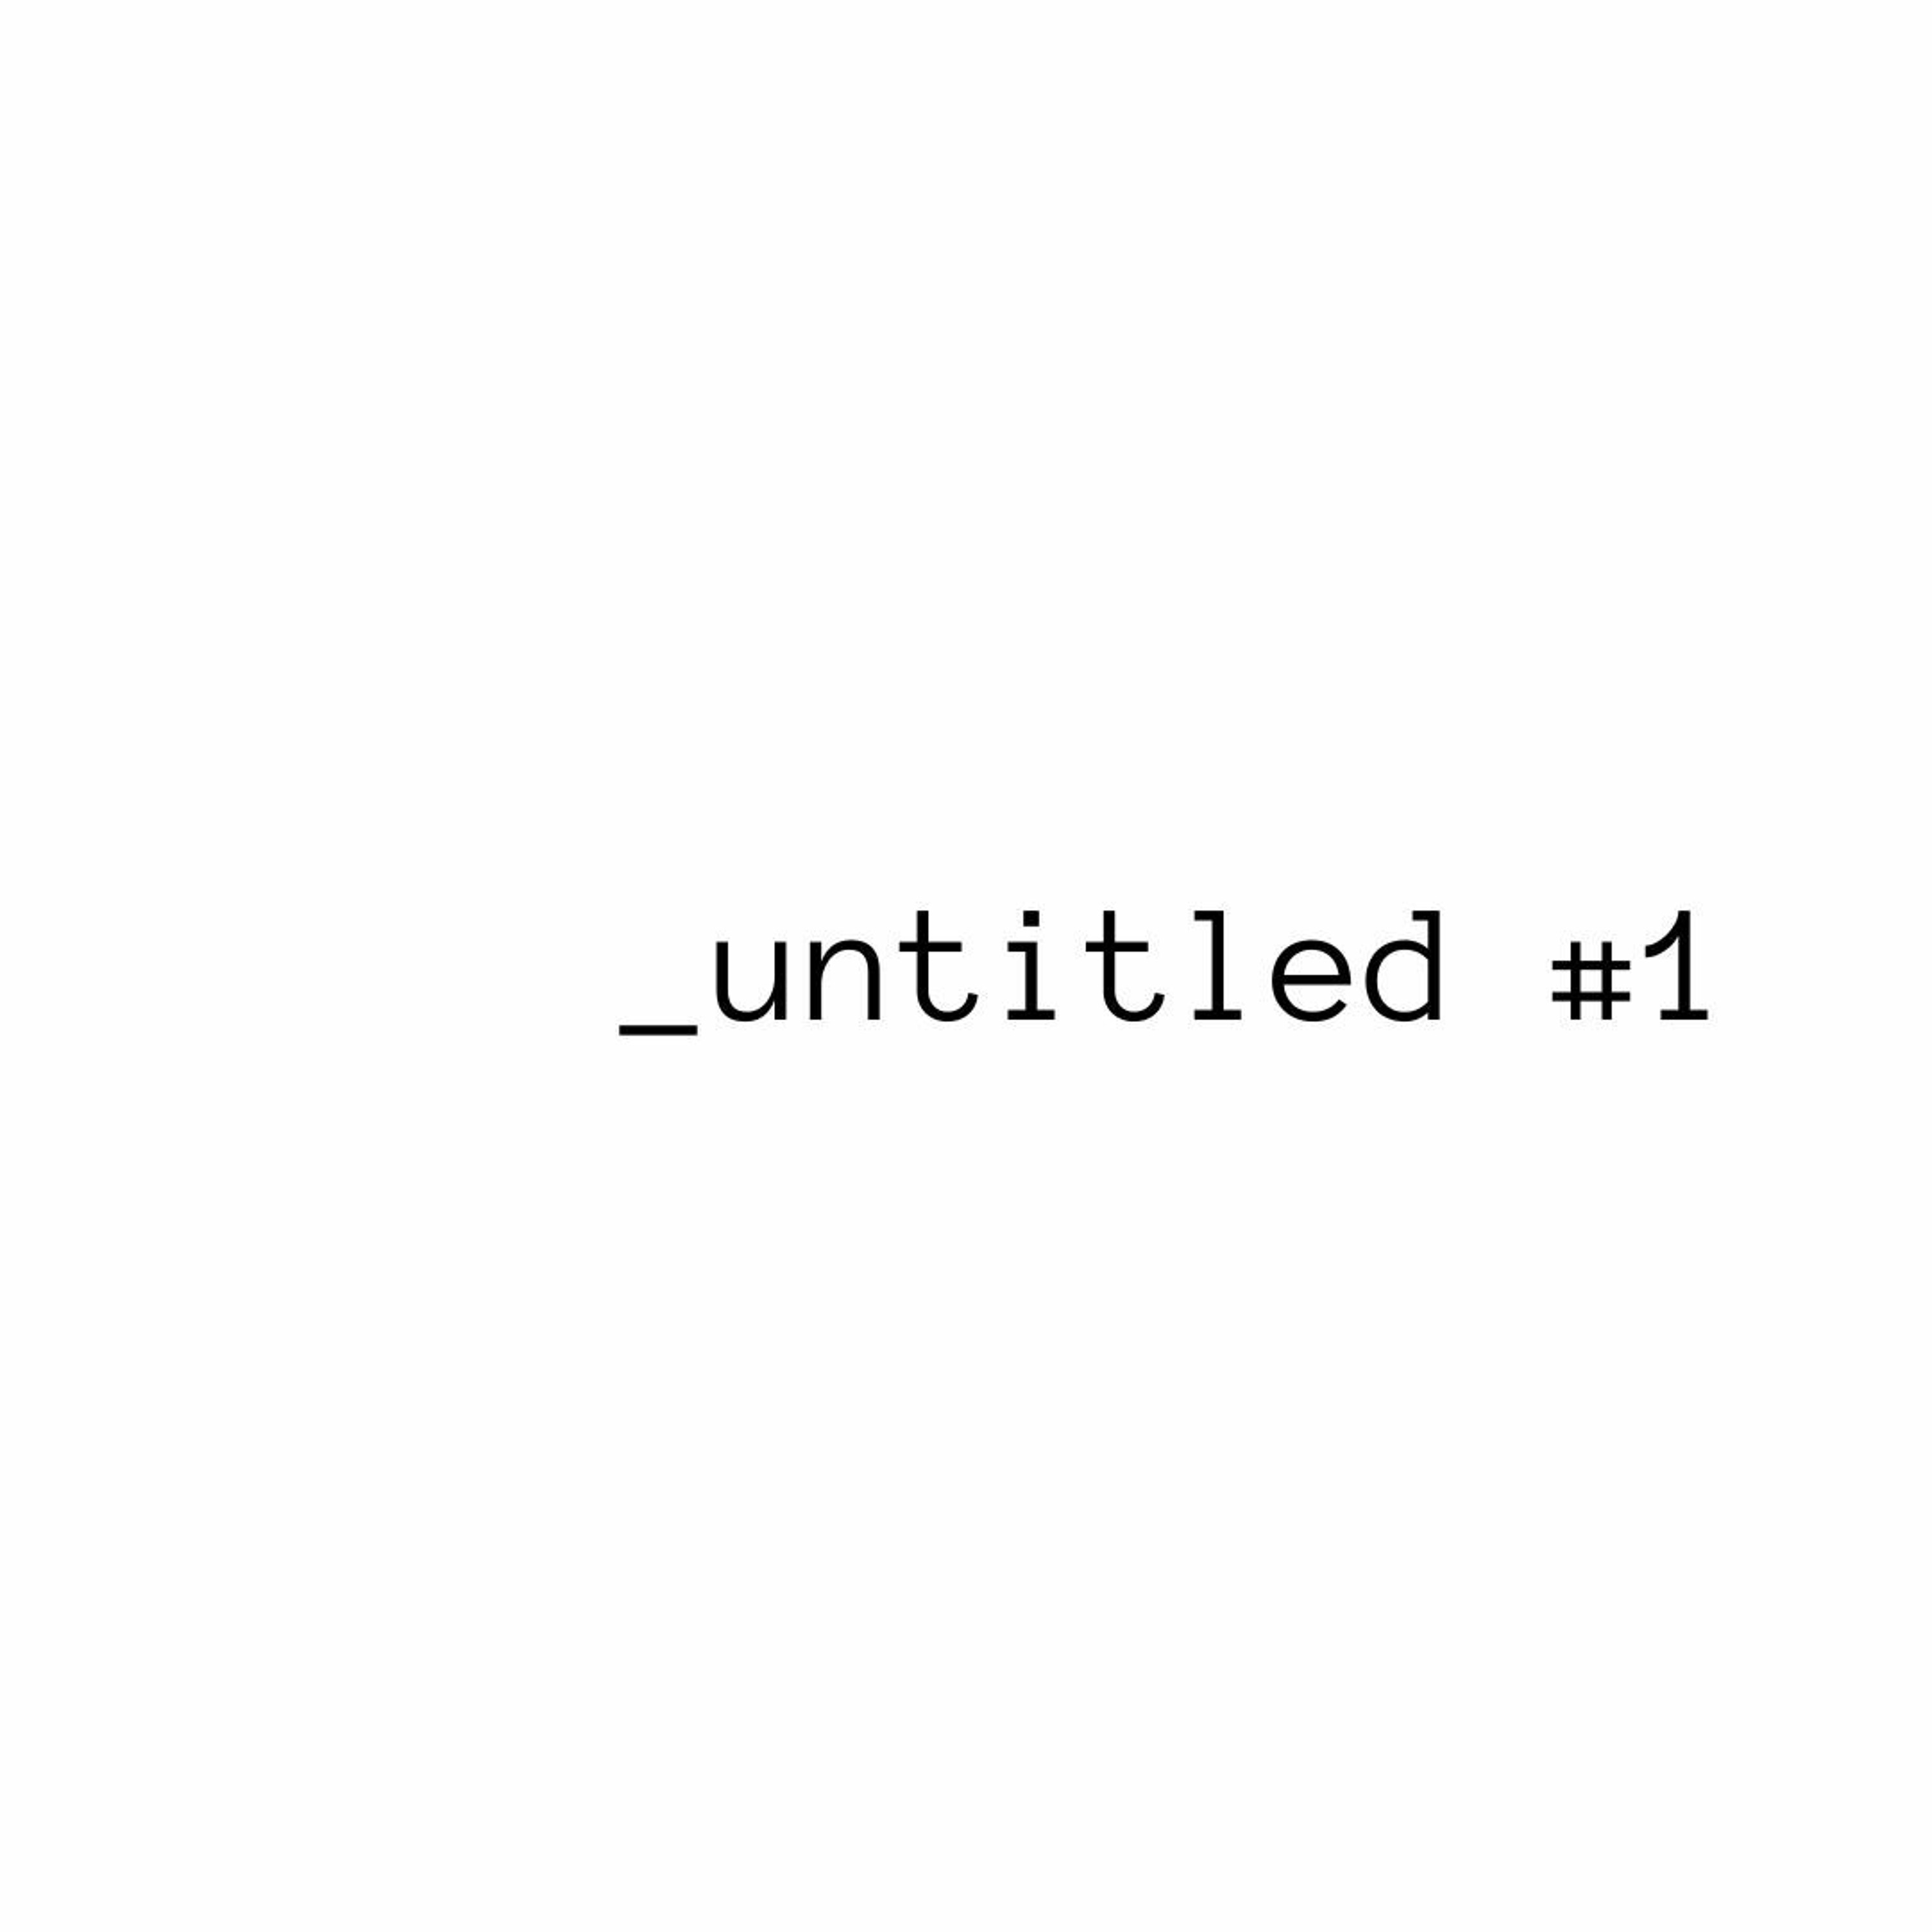 _untitled #1